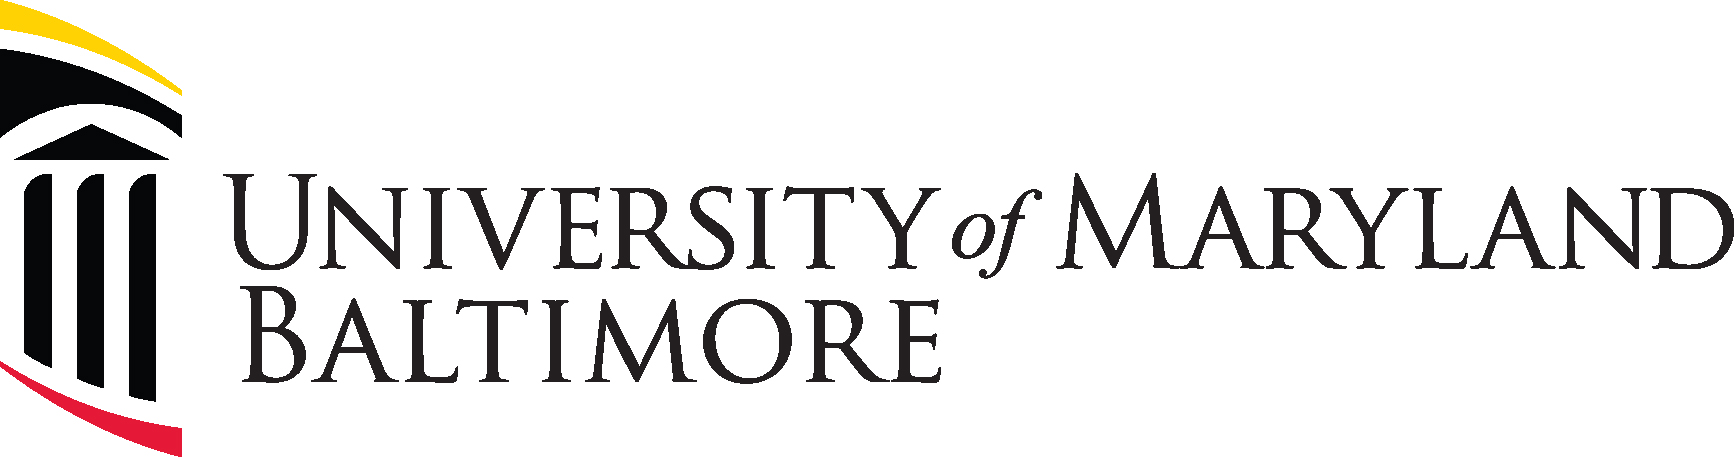 institutions-UMB-logo_horizontal.jpg